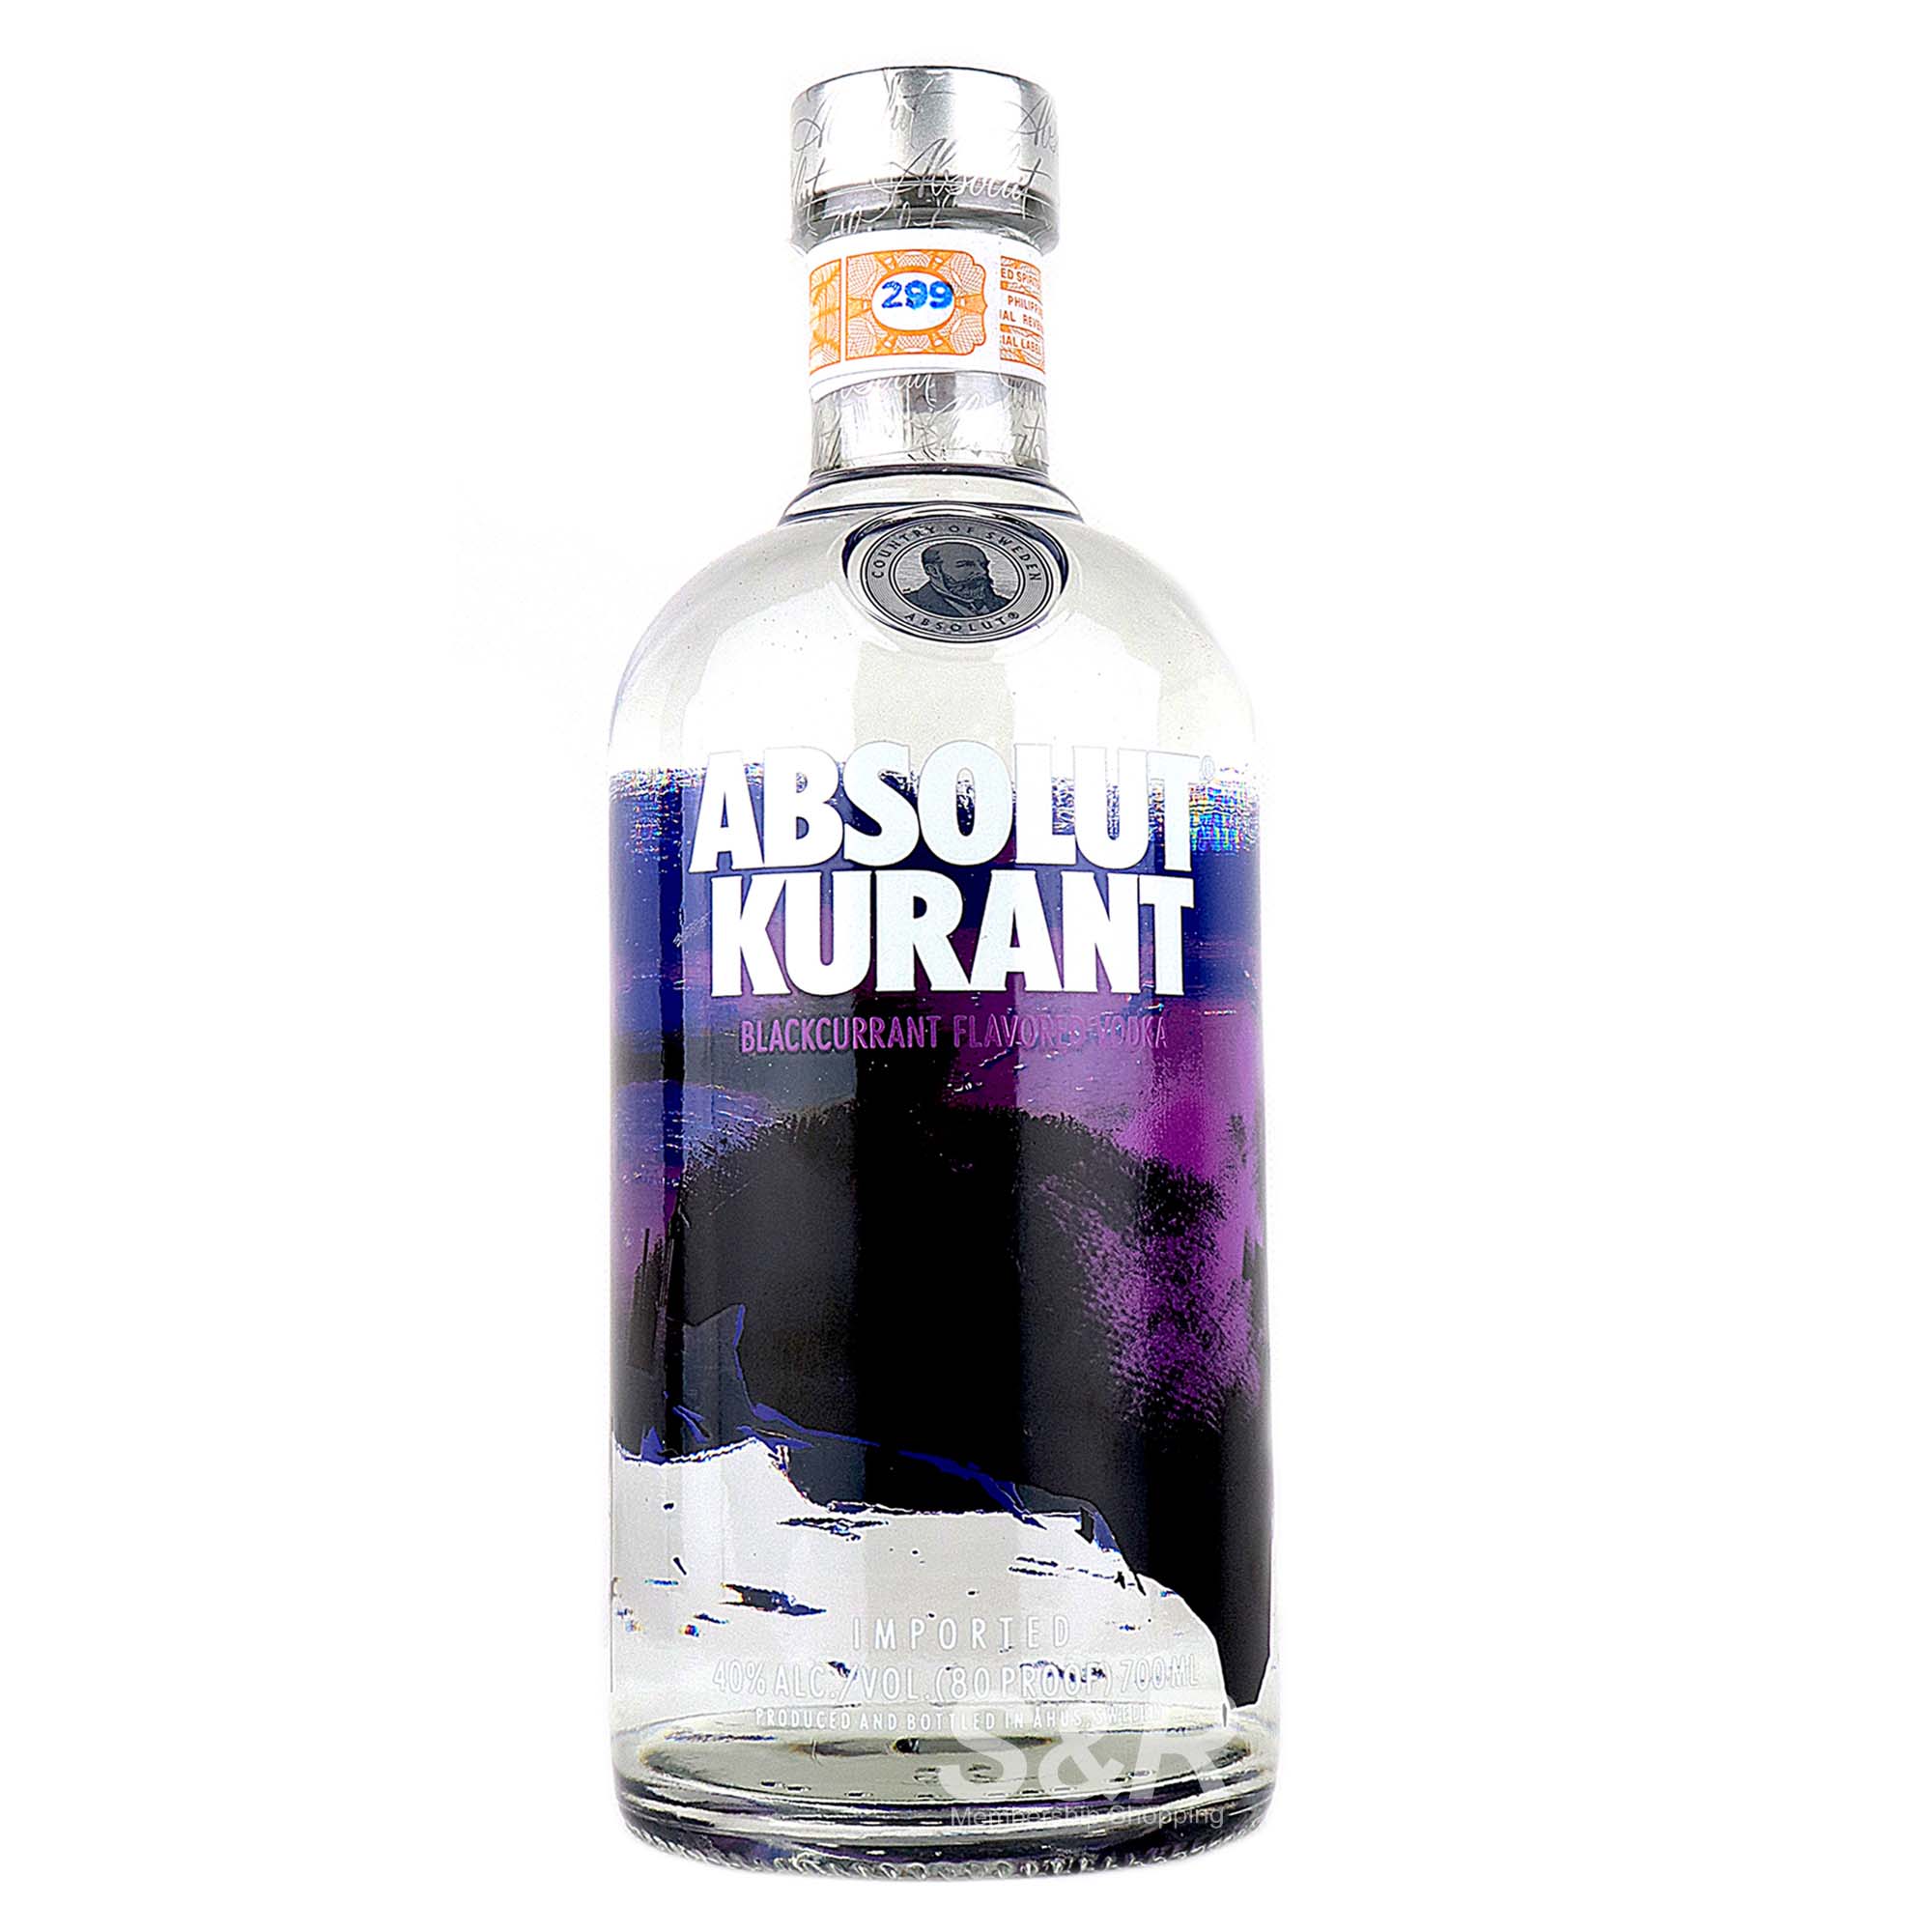 Absolut Kurant Blackcurrant Flavored Vodka 700mL